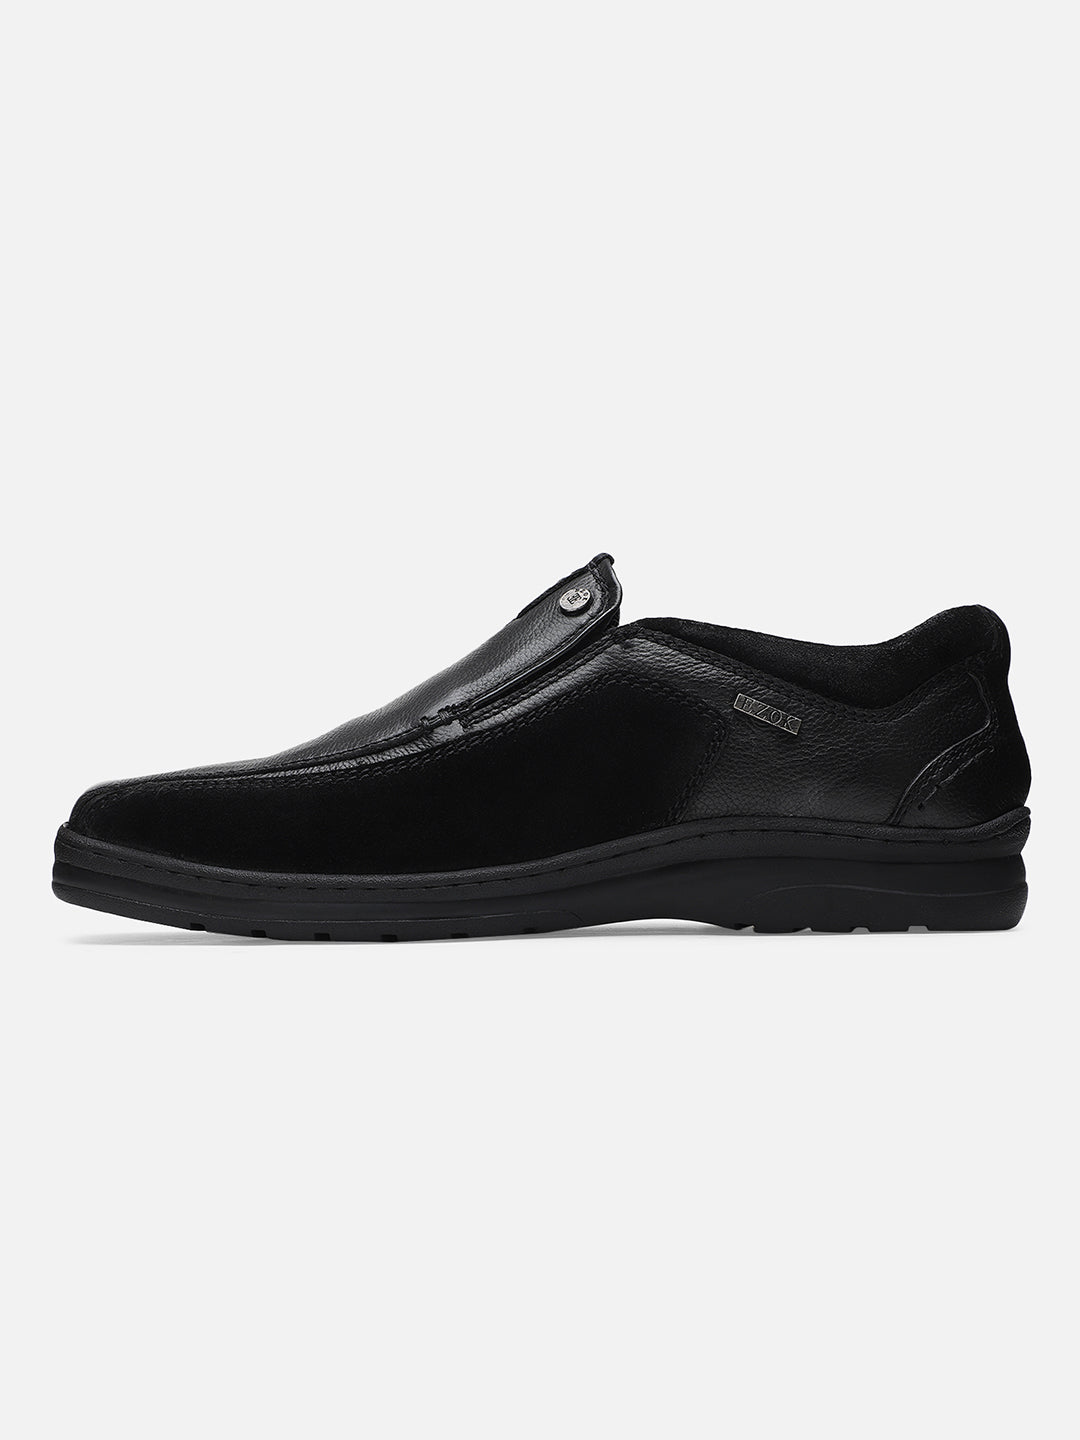 Ezok Black Leather Casual Shoes